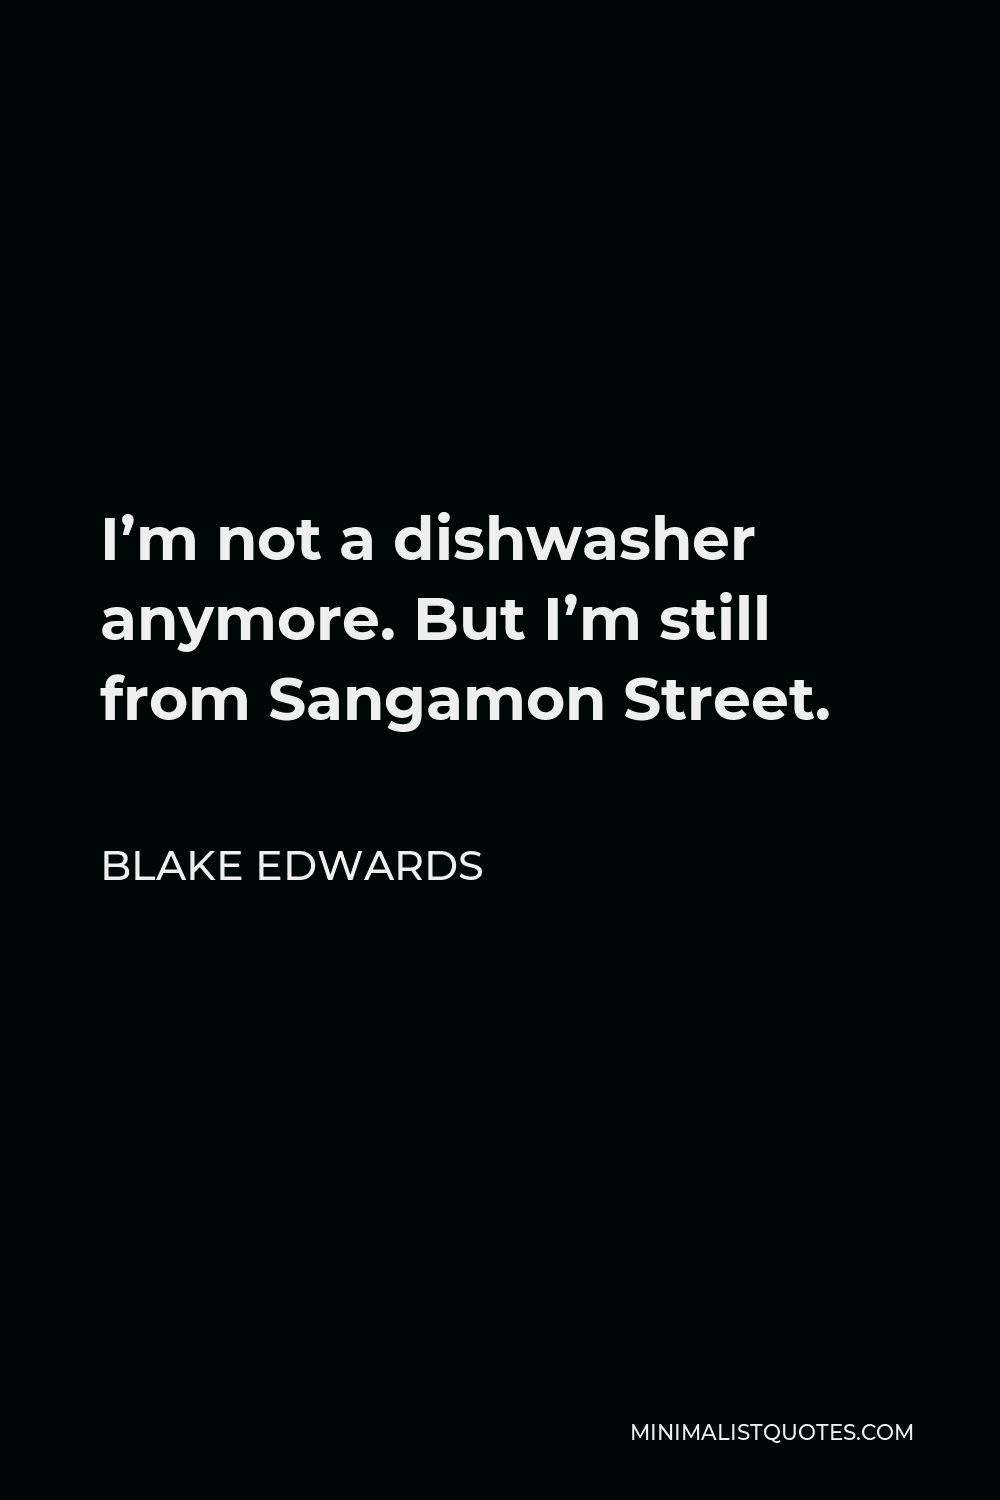 Blake Edwards Quote - I’m not a dishwasher anymore. But I’m still from Sangamon Street.